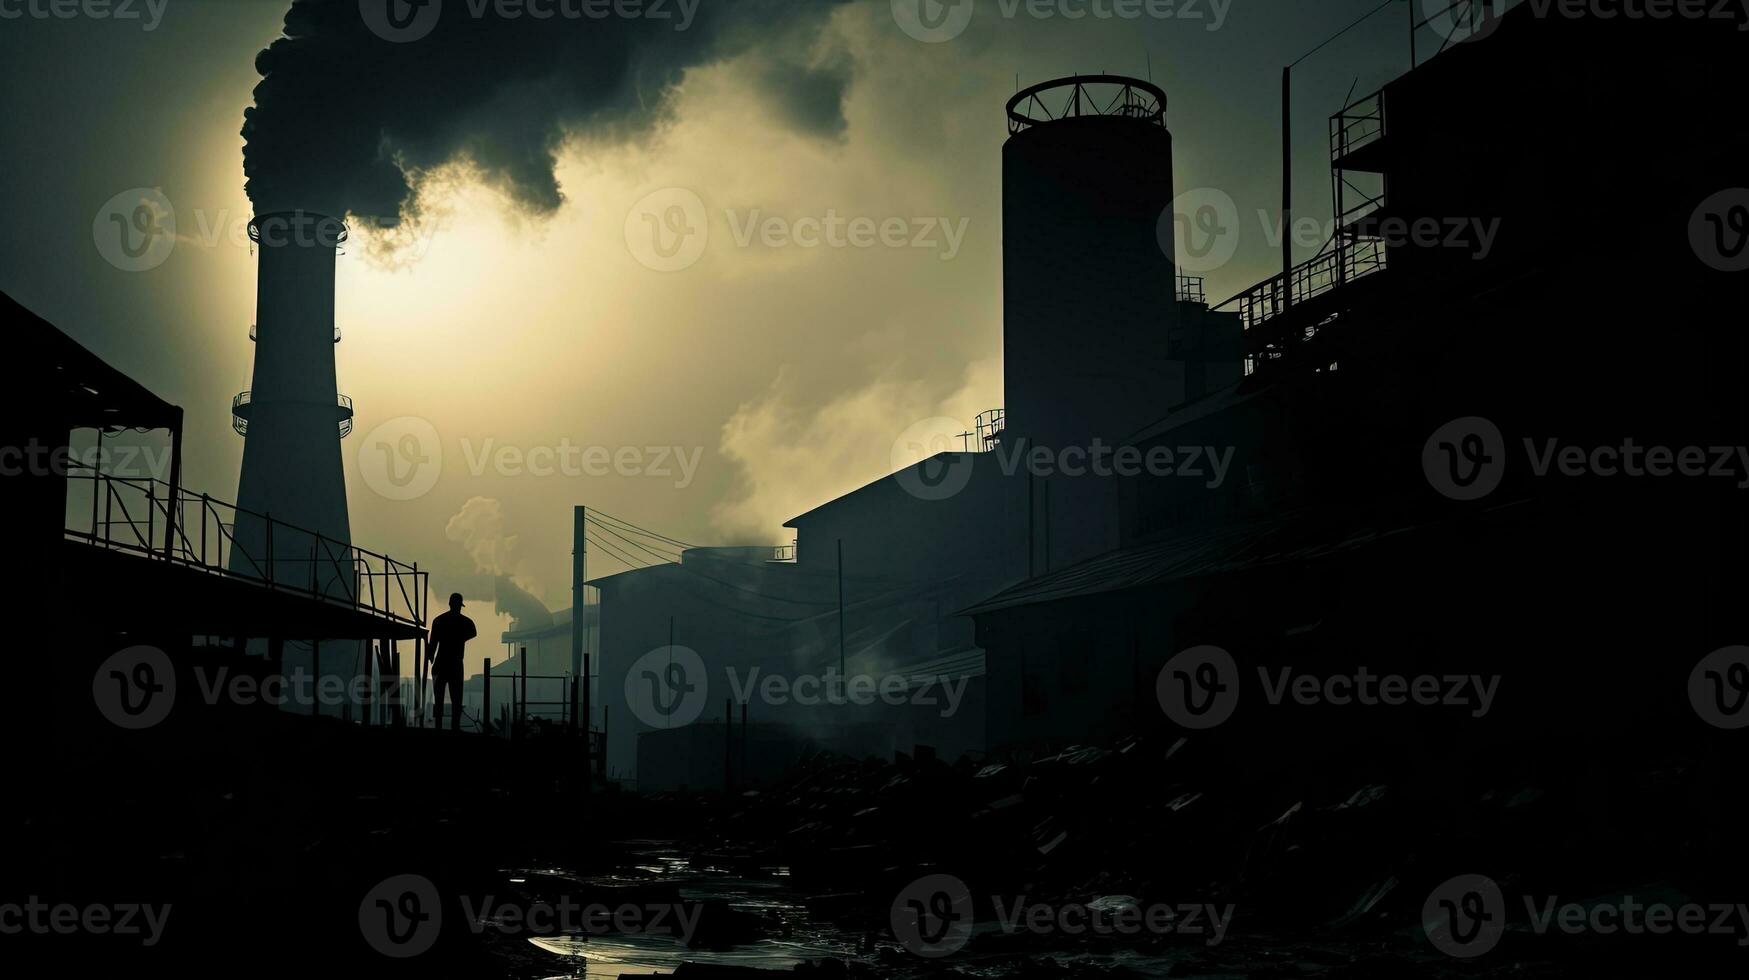 esta foto muestra un carbón caldera instalación con un alto Chimenea tomado a un semarang fábrica. silueta concepto